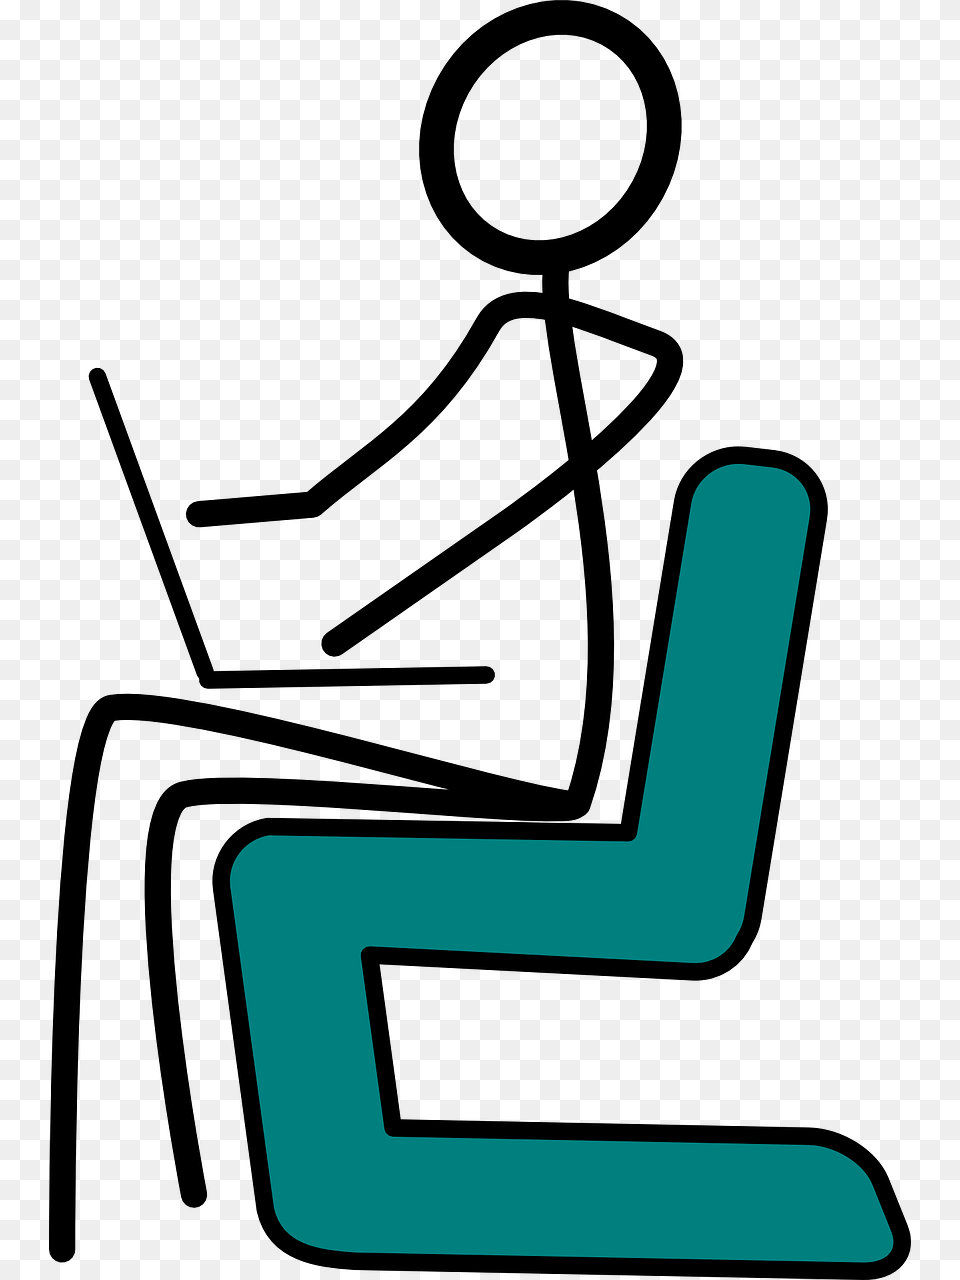 Stick Figure Sitting Down, Symbol, Text, Smoke Pipe, Furniture Free Png